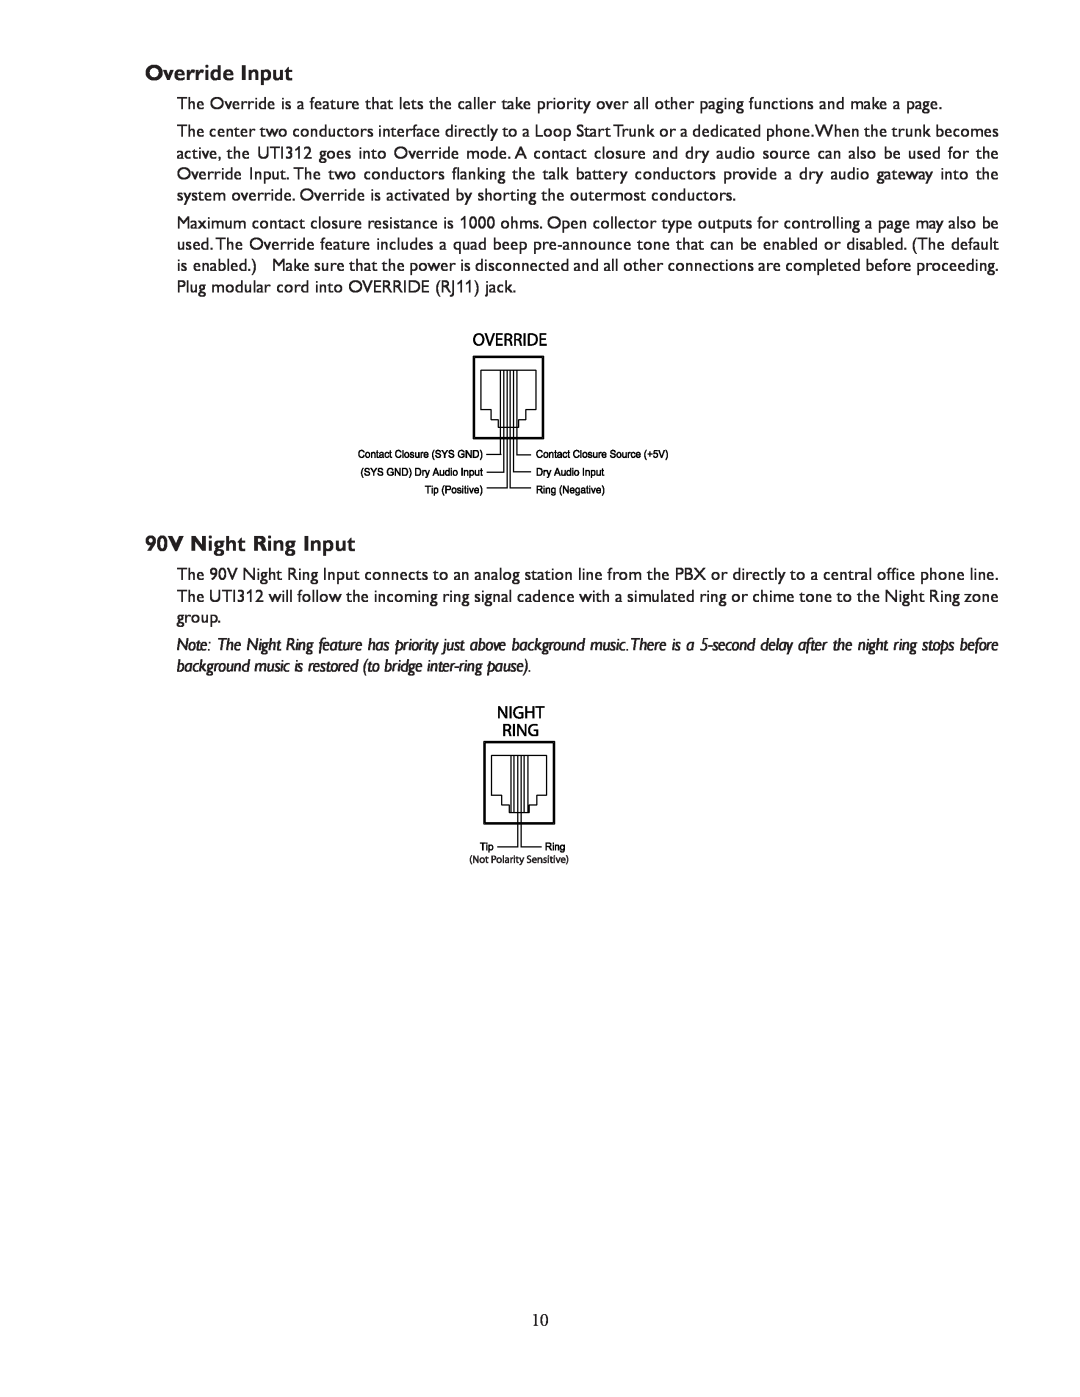 Bogen UTI312 specifications Override Input, 90V Night Ring Input 